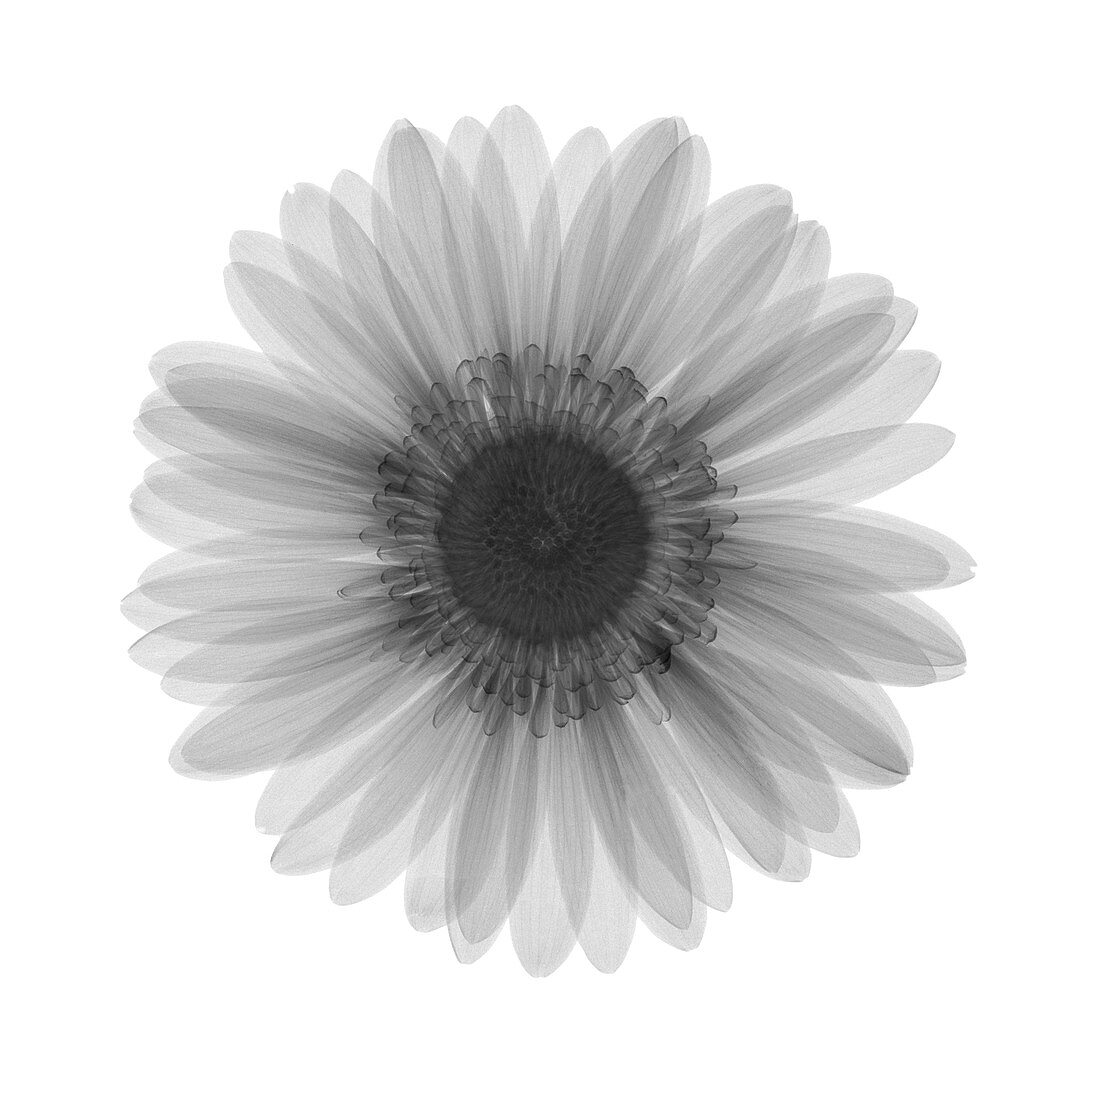 Chrysanthemum flower, X-ray